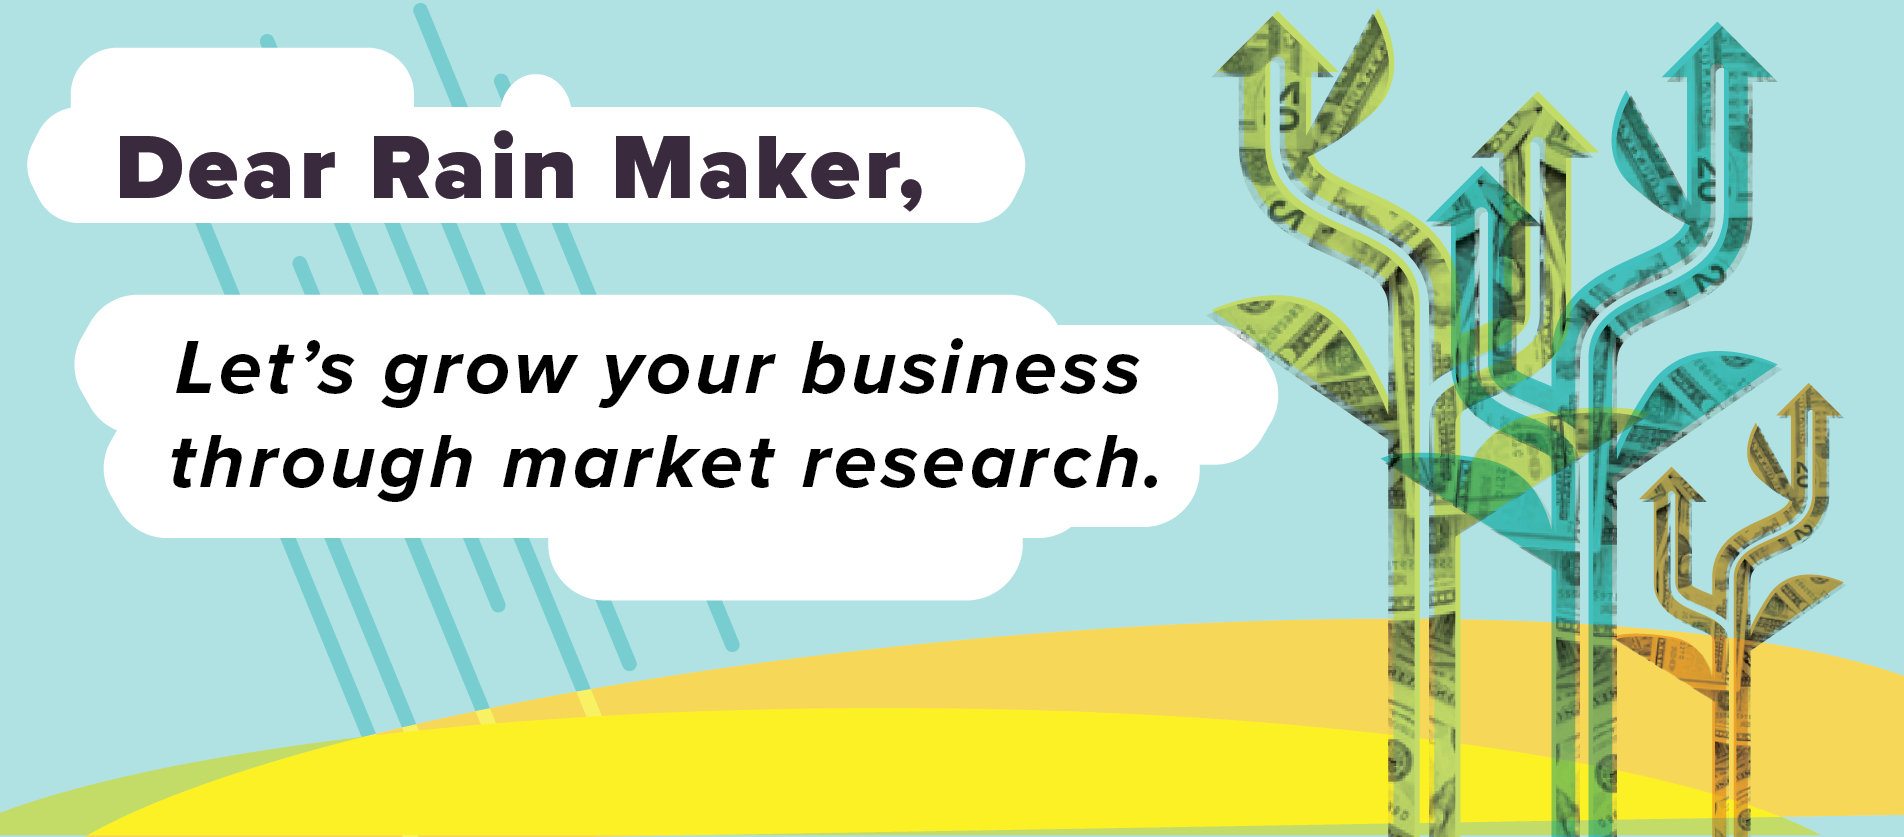 Dear Rain Maker, Let's grow your business through market research.